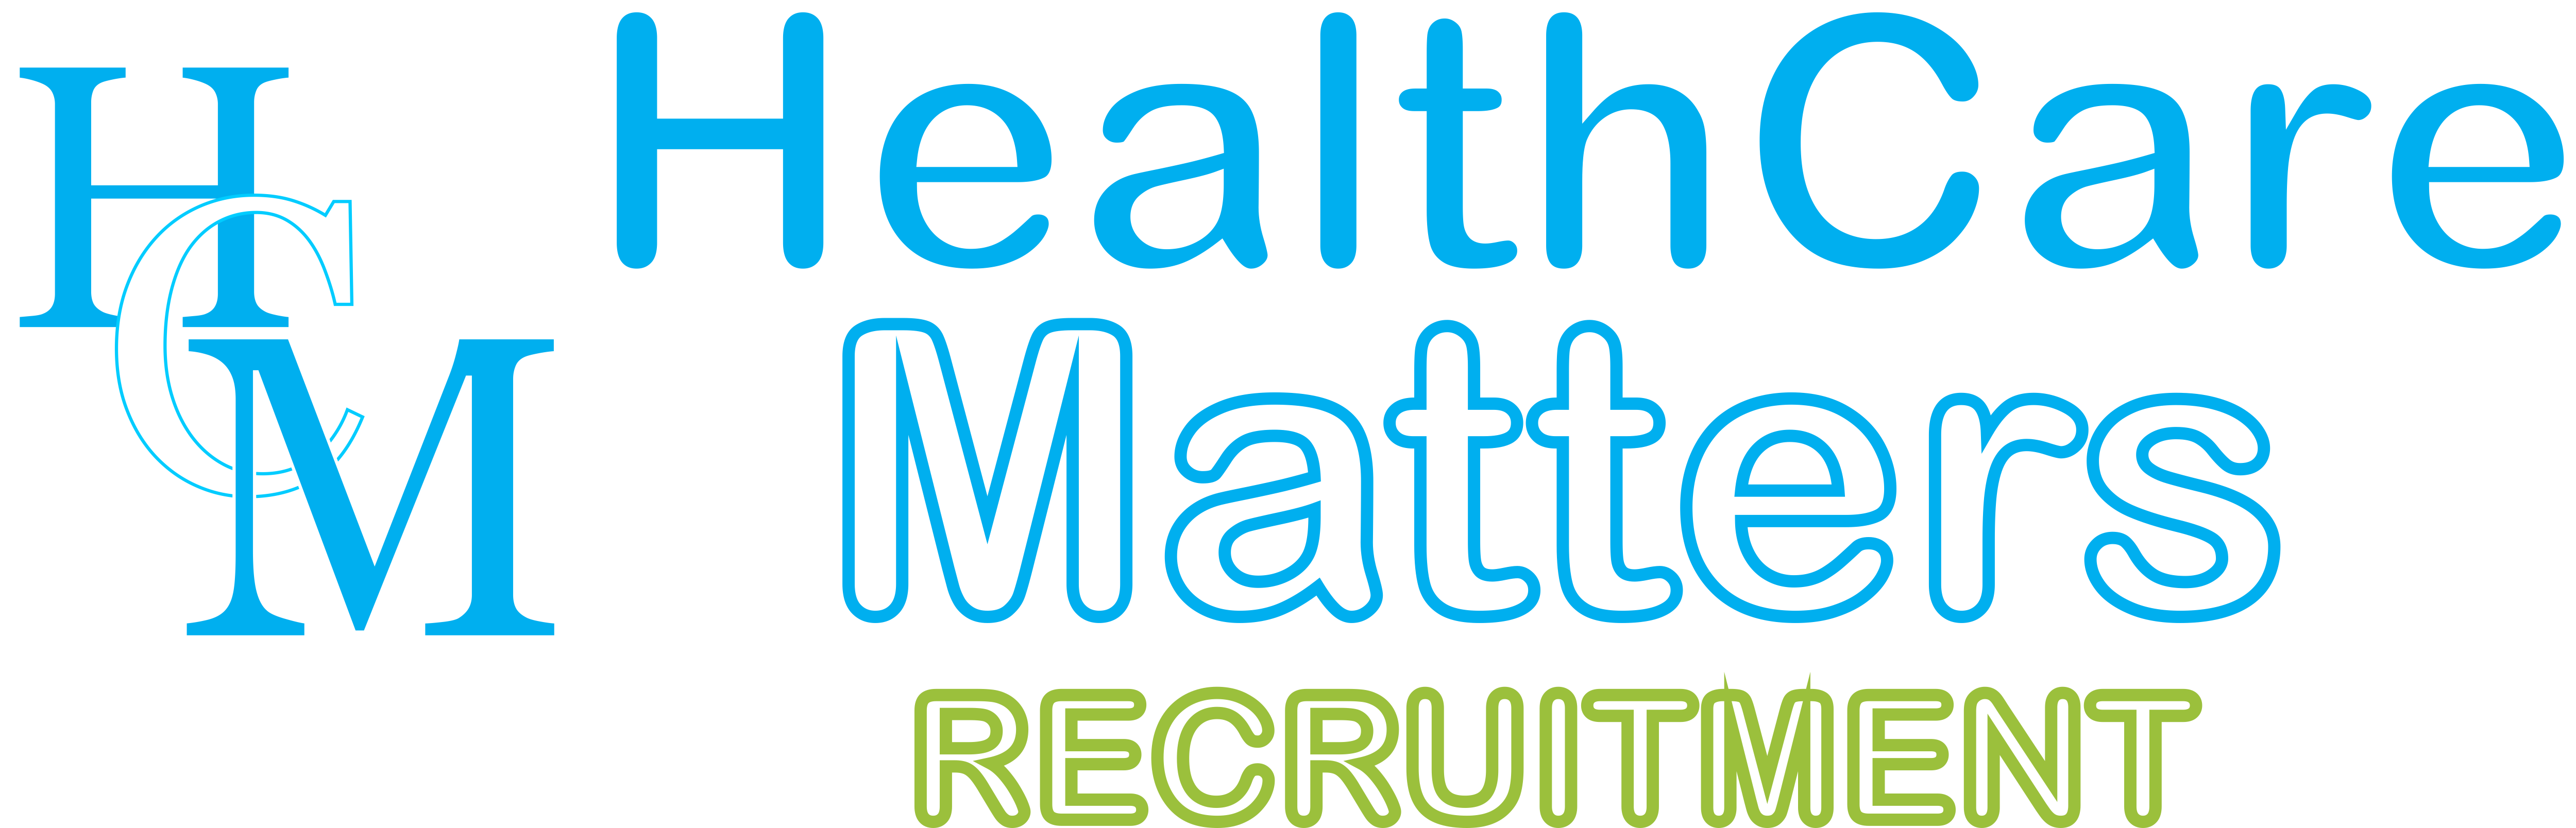 Healthcare matters recruitment